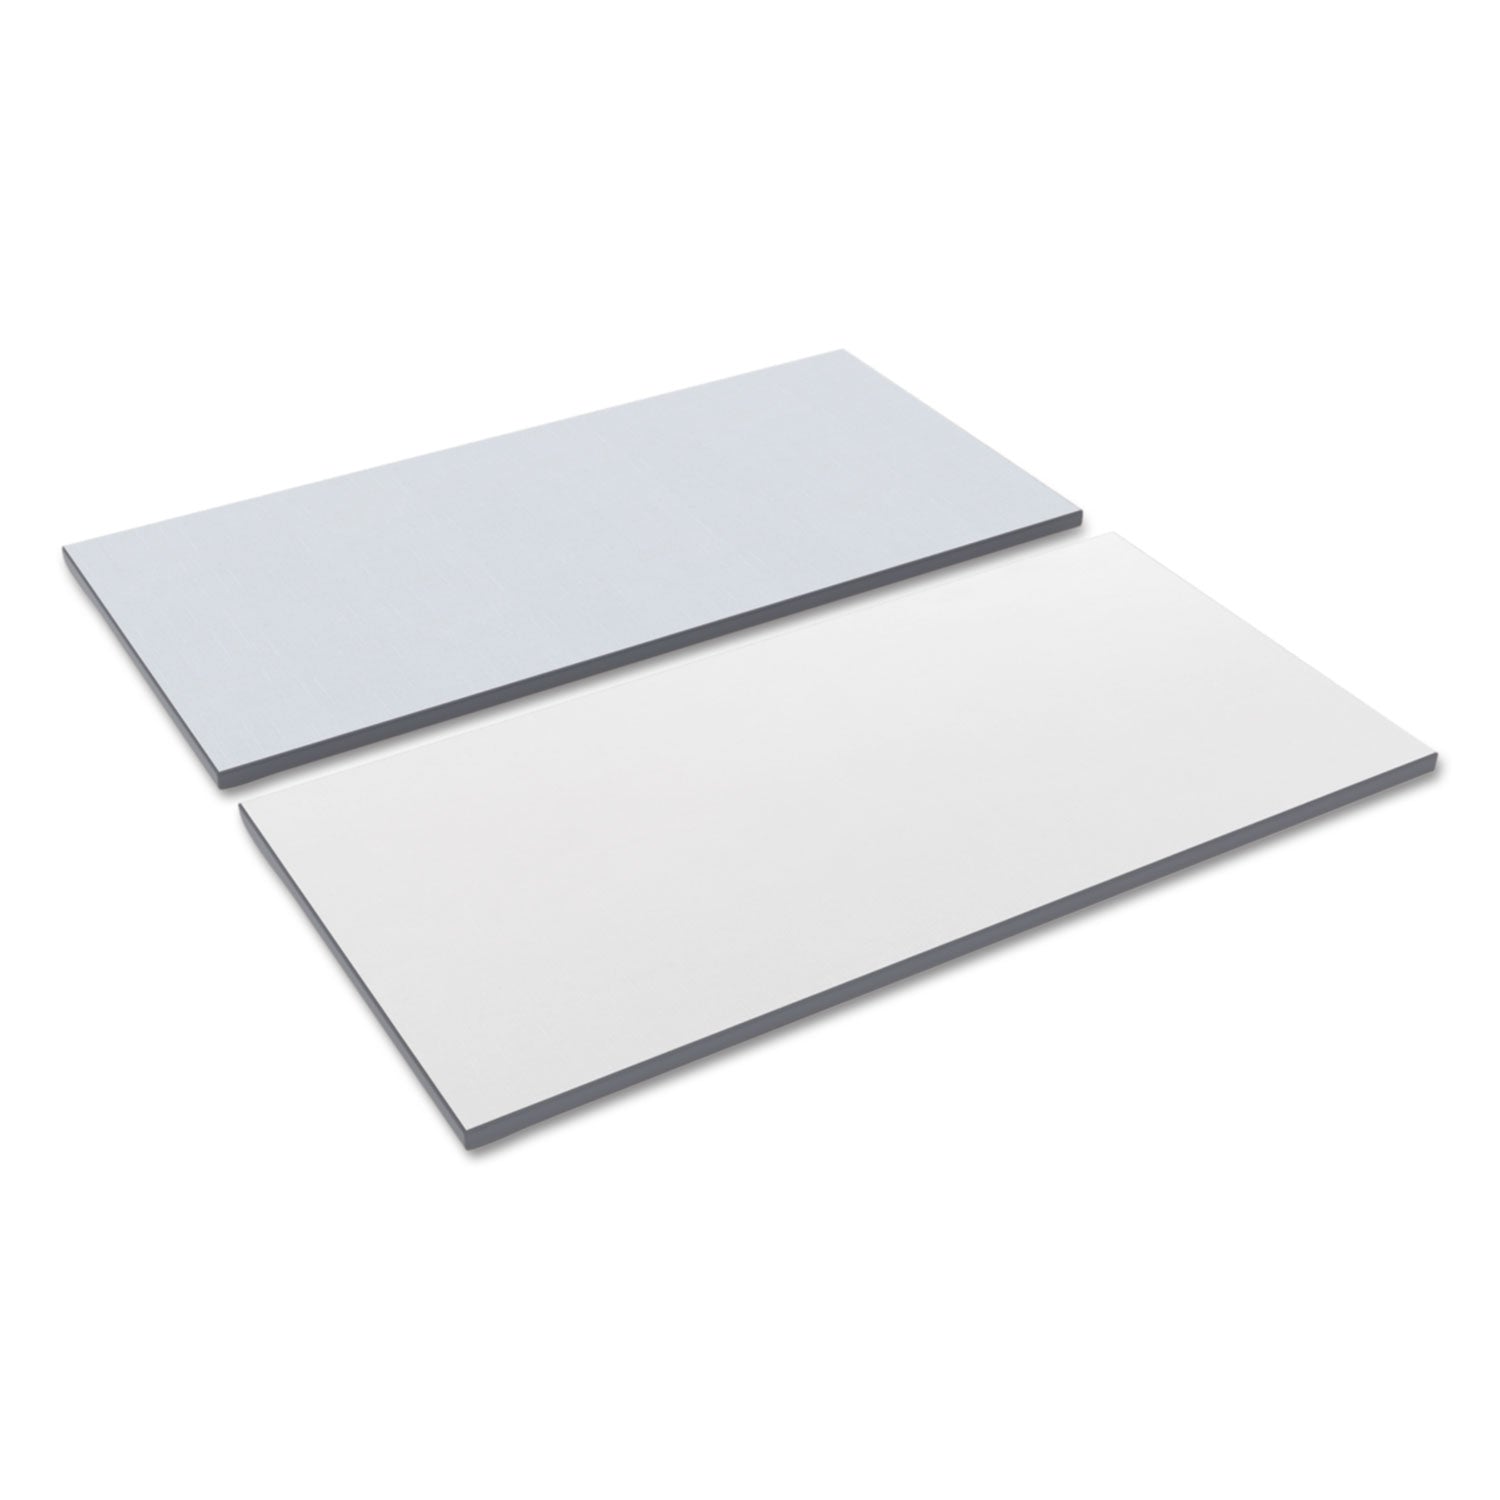 reversible-laminate-table-top-rectangular-4763w-x-2363d-white-gray_alett4824wg - 1